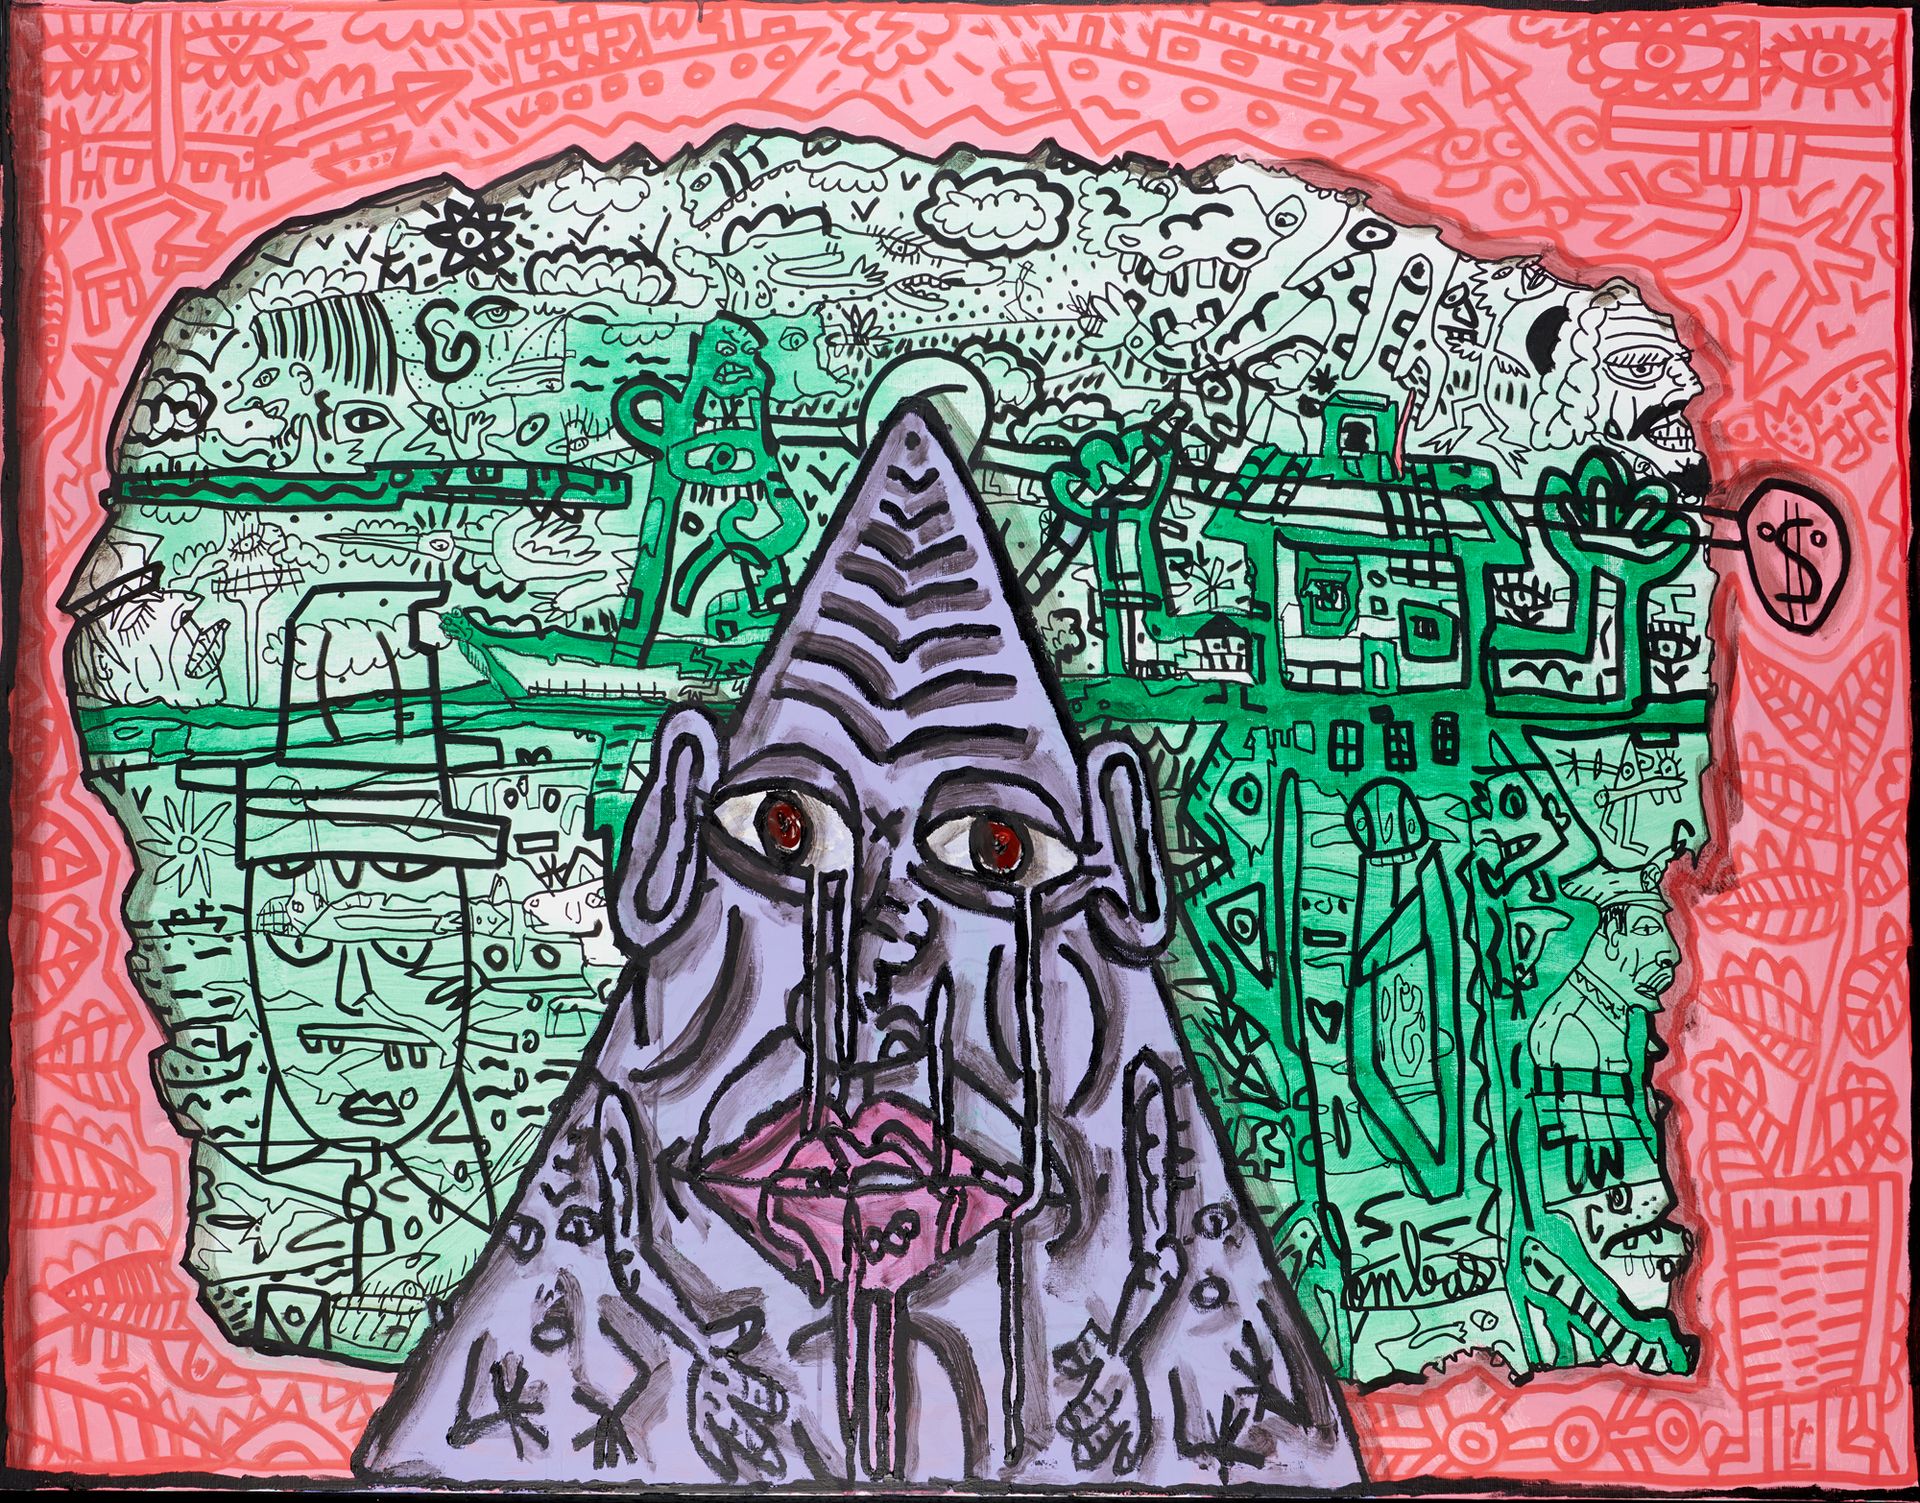 Robert COMBAS, né en 1957 三角形乔西埃，粉色背景上的绿色景观之王

丙烯酸画布，右下方有签名
114 x 146 厘米 

参考书目：&hellip;